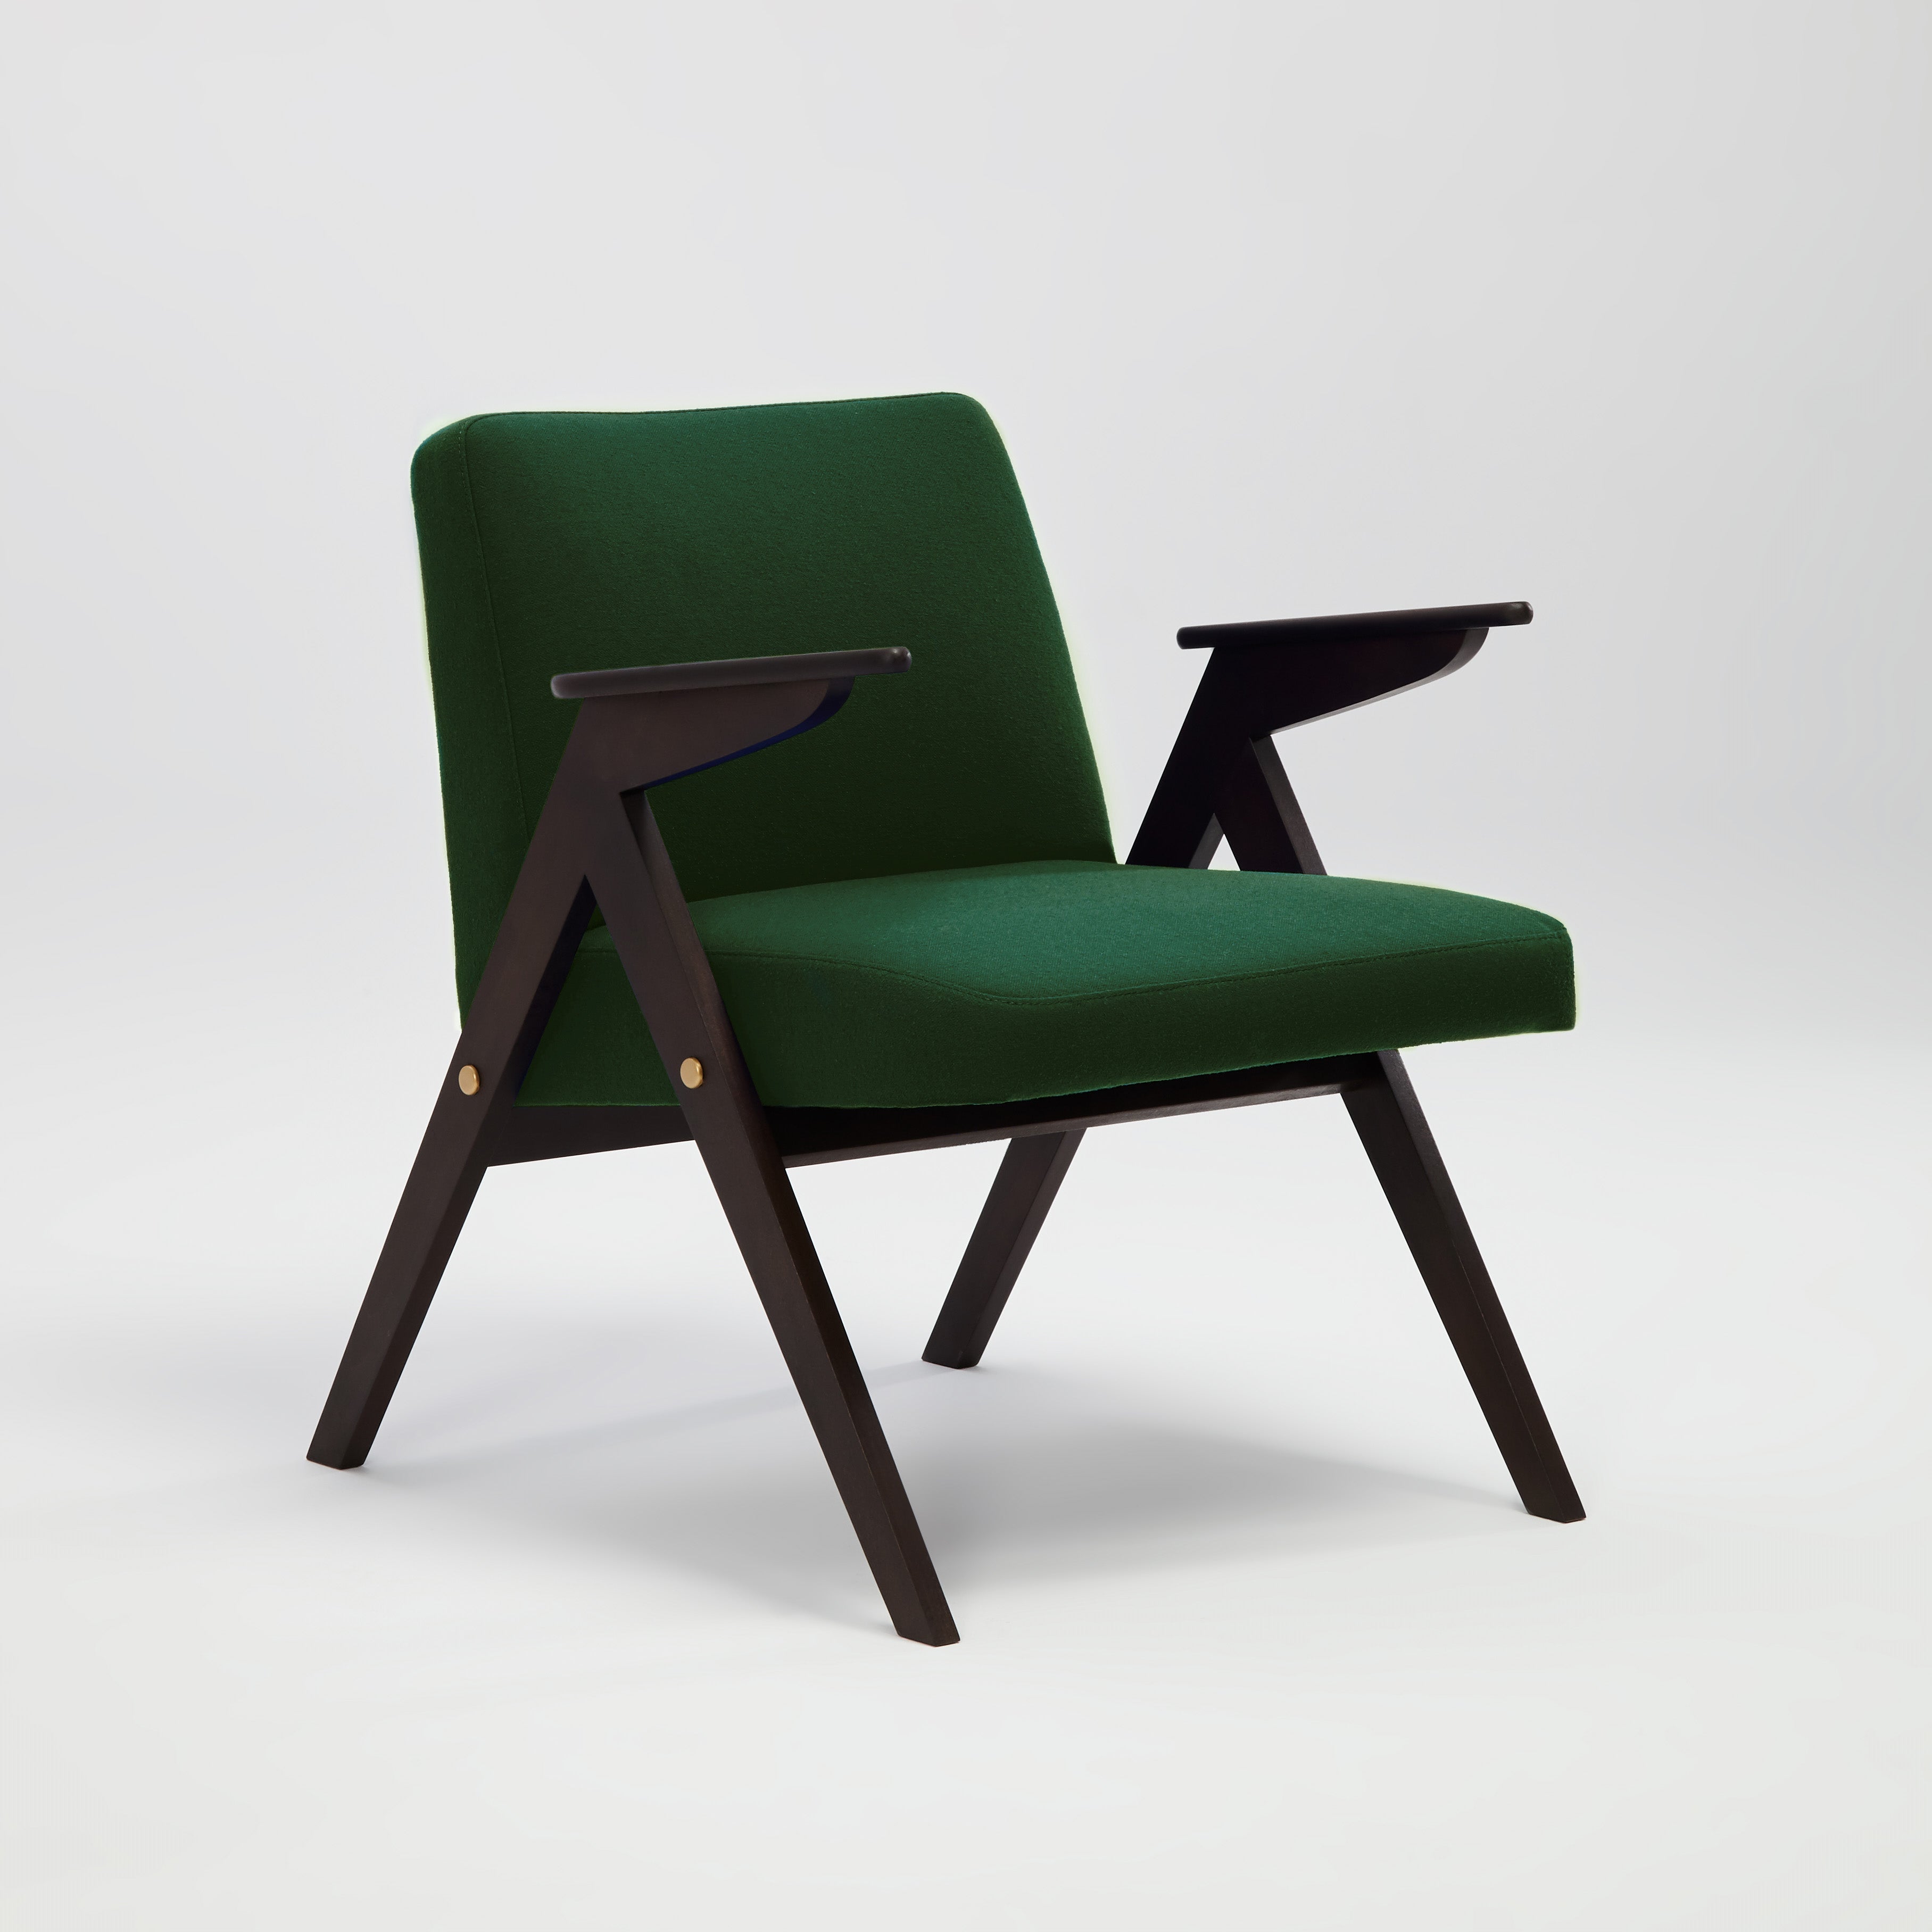 JUNCO Chair black beech wood upholstery colour green